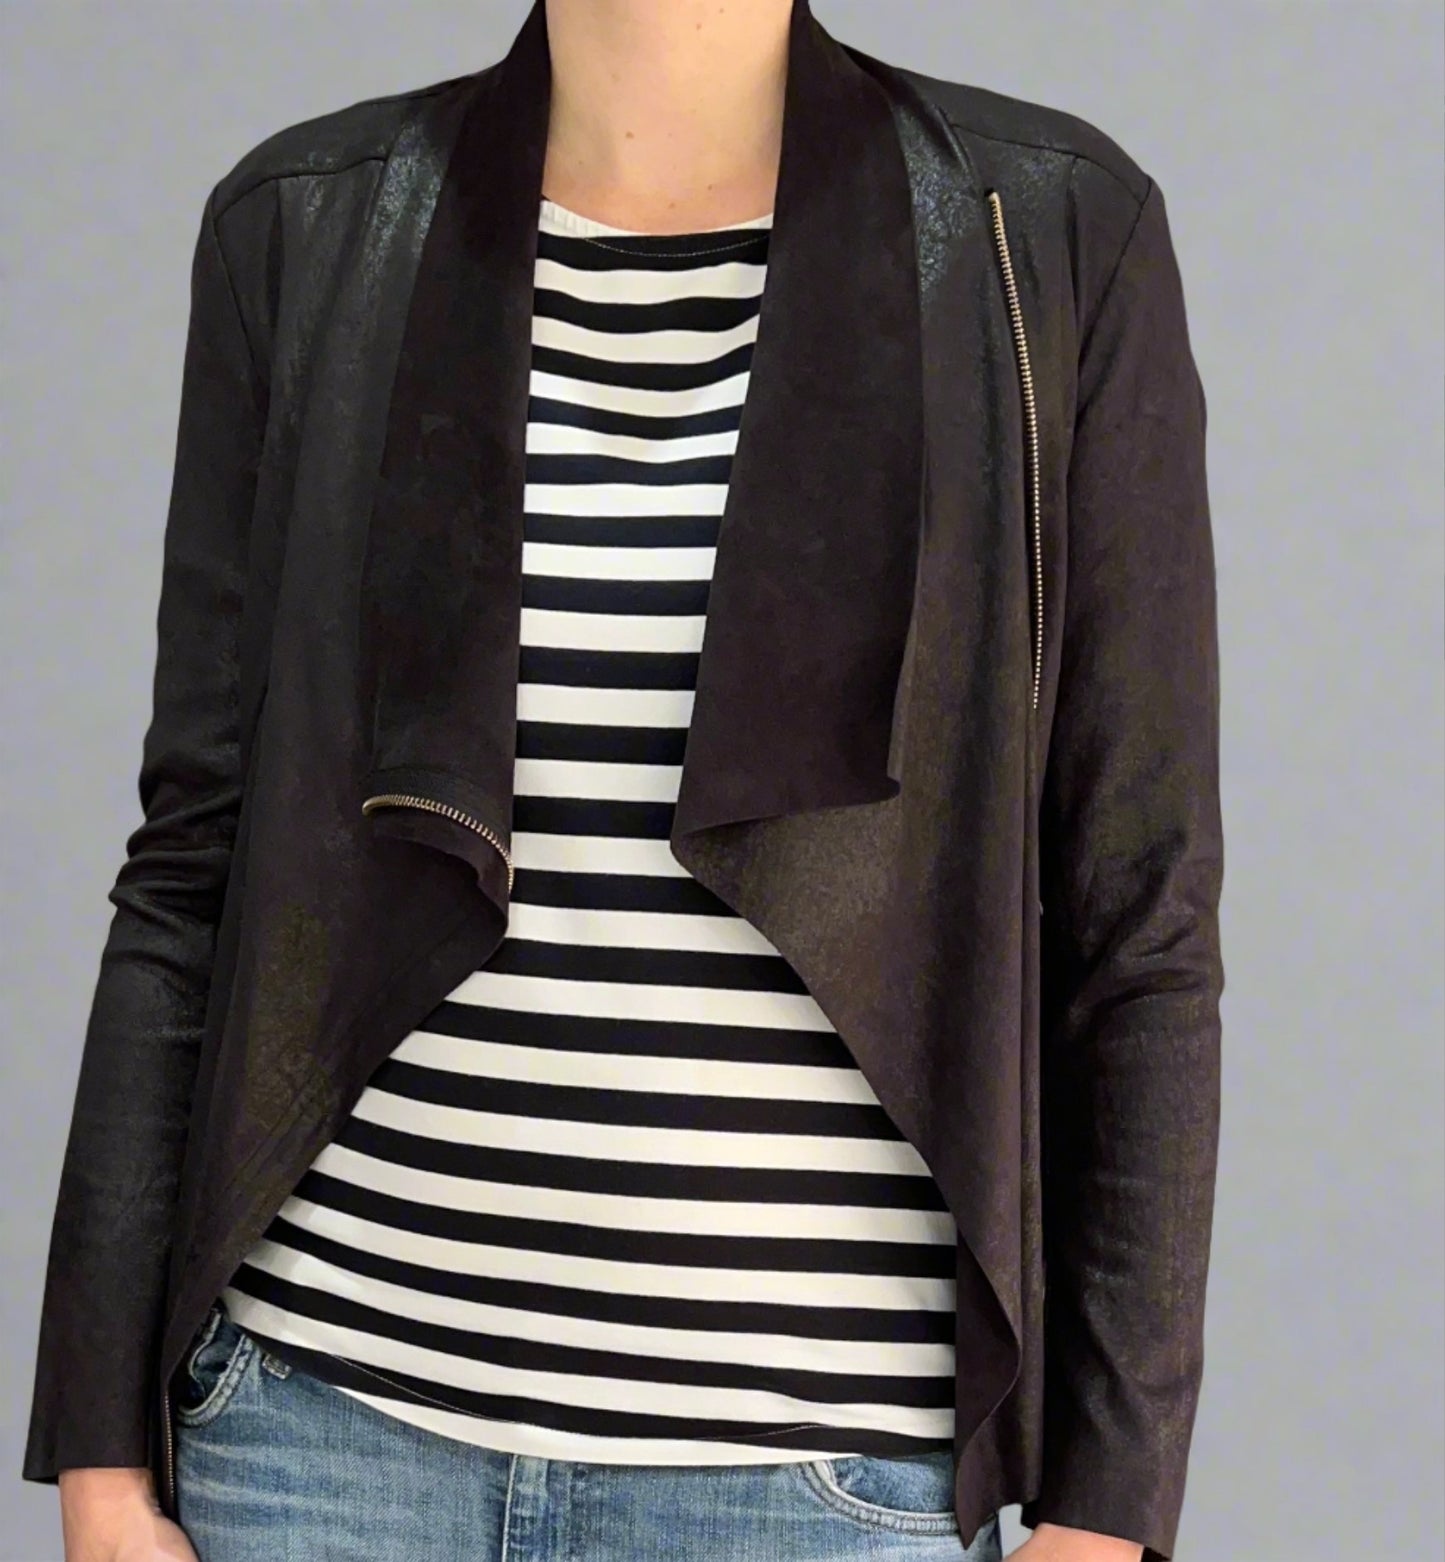 Zara Black Suede Jacket - Size 32 / US Medium